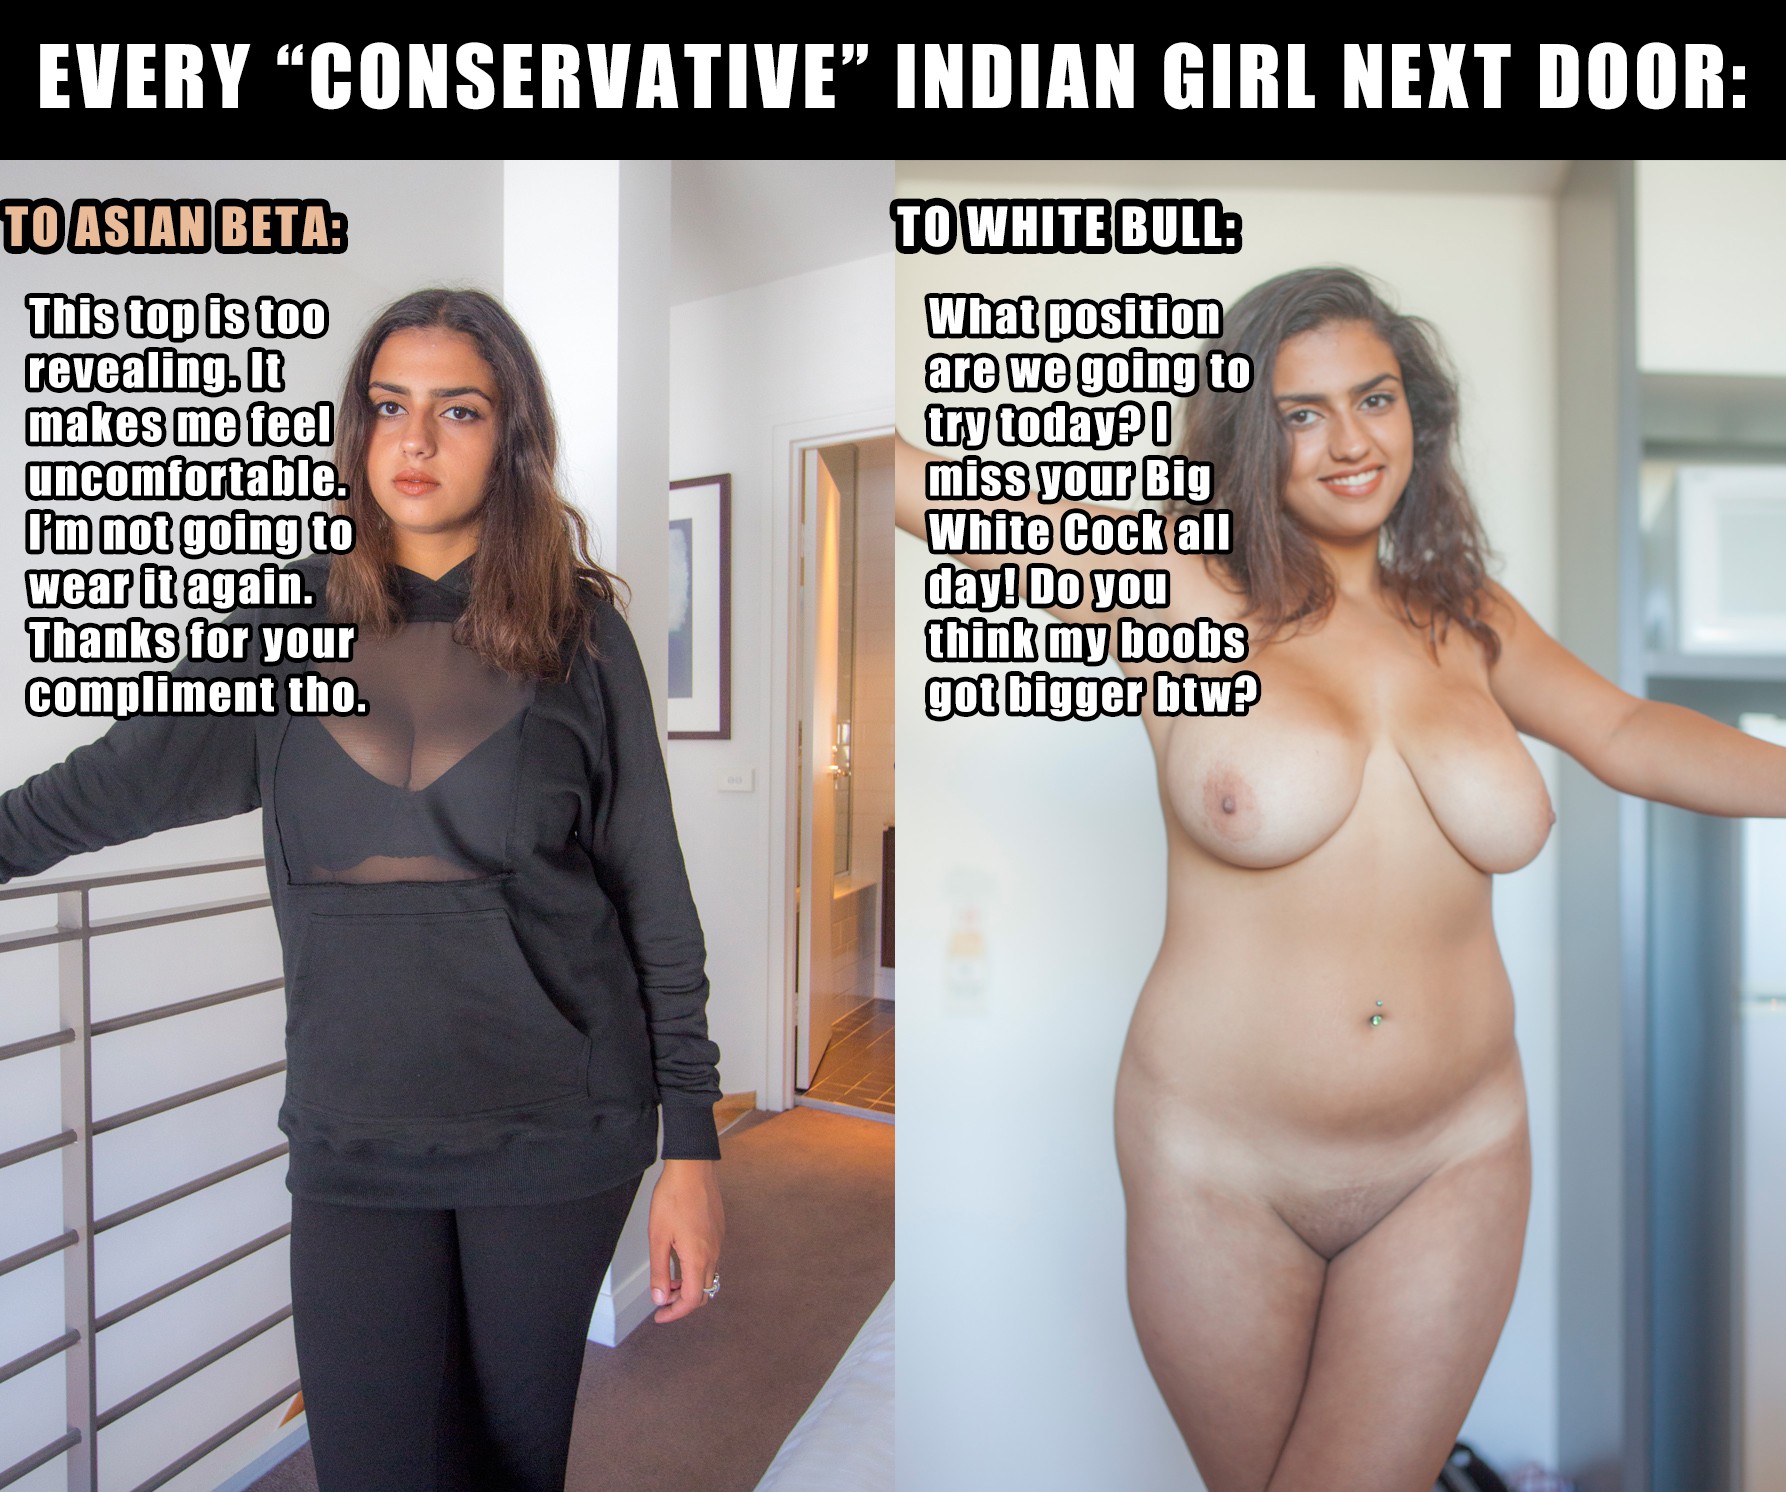 Indian girl next door reacts to white bull cock vs beta dick image